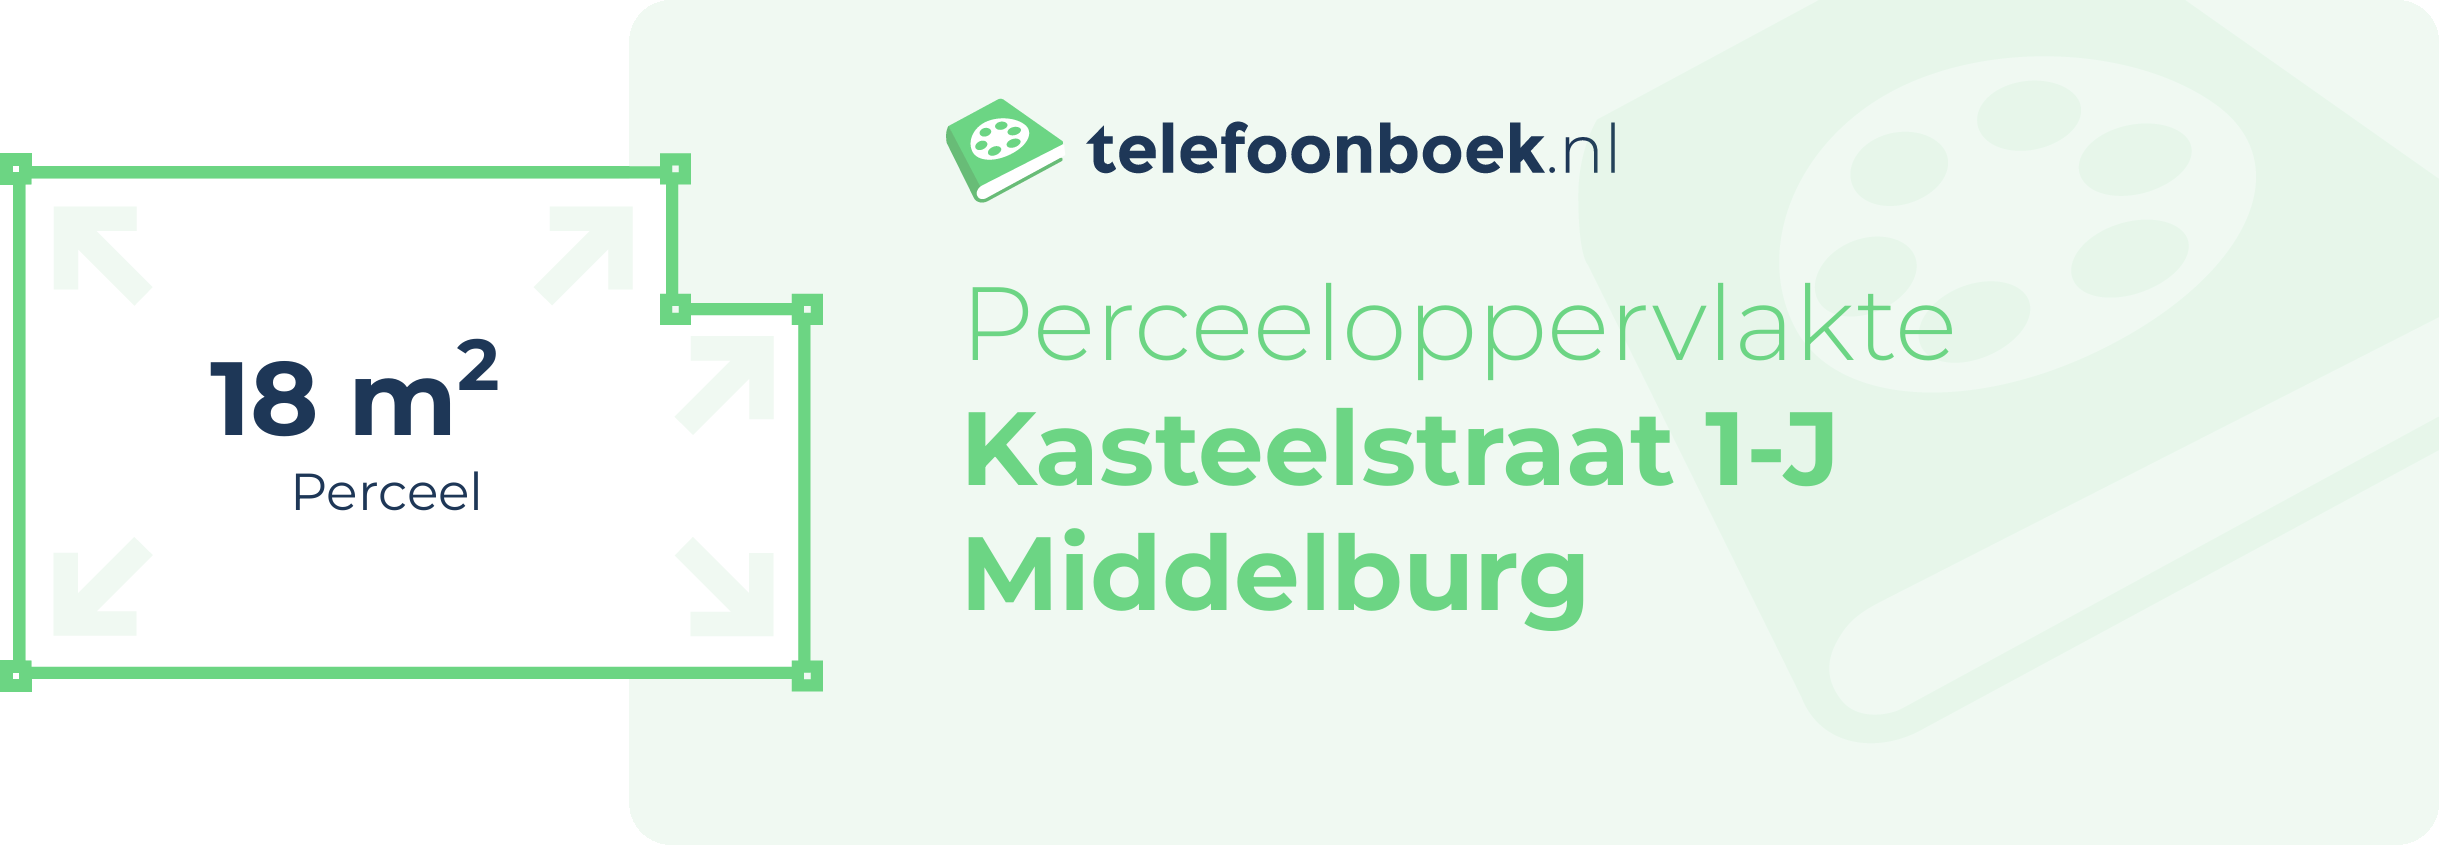 Perceeloppervlakte Kasteelstraat 1-J Middelburg